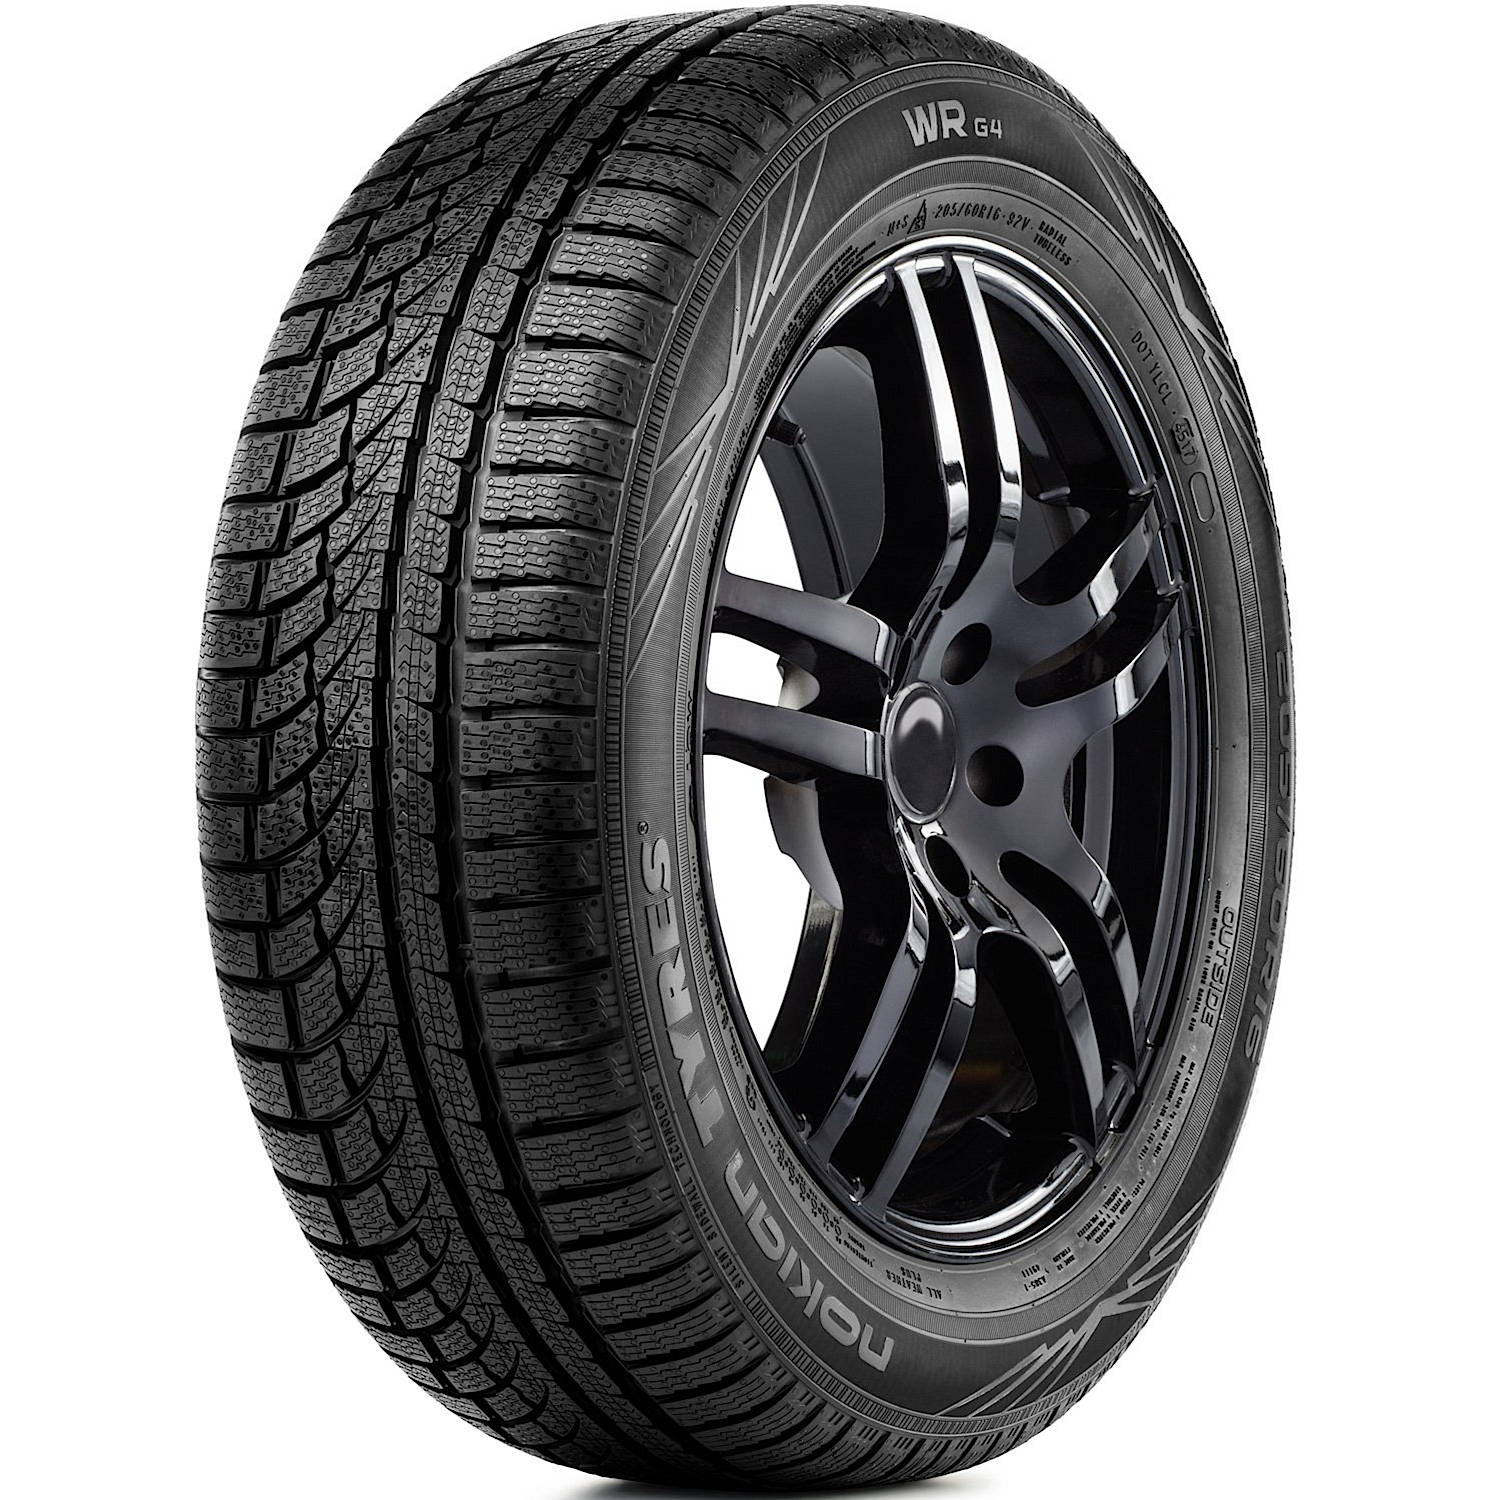 NOKIAN WR G4 225/55R17 (26.8X8.9R 17) Tires